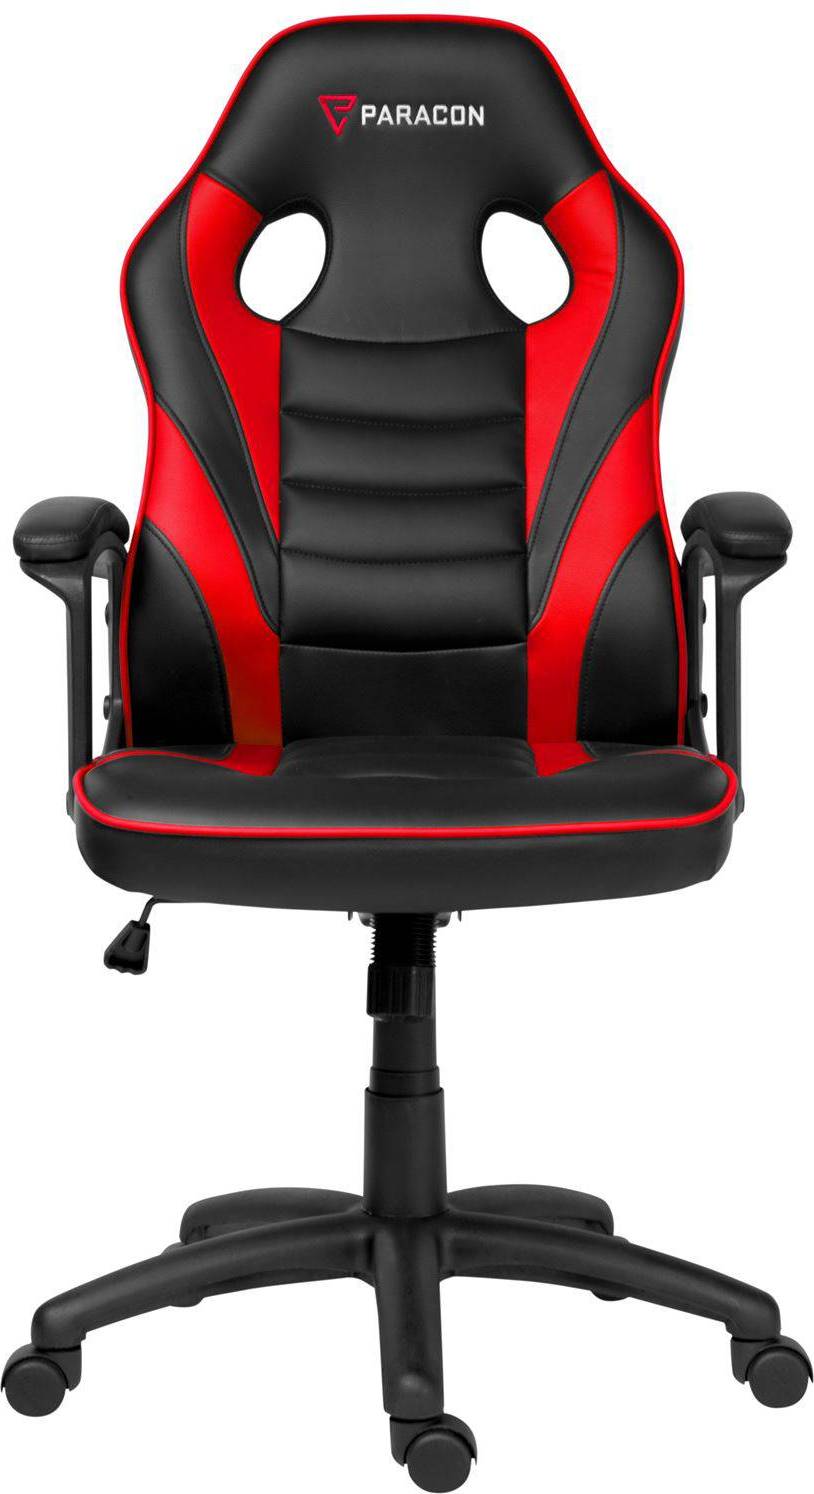  Bild på Paracon Squire Gaming Chair - Black/Red gamingstol